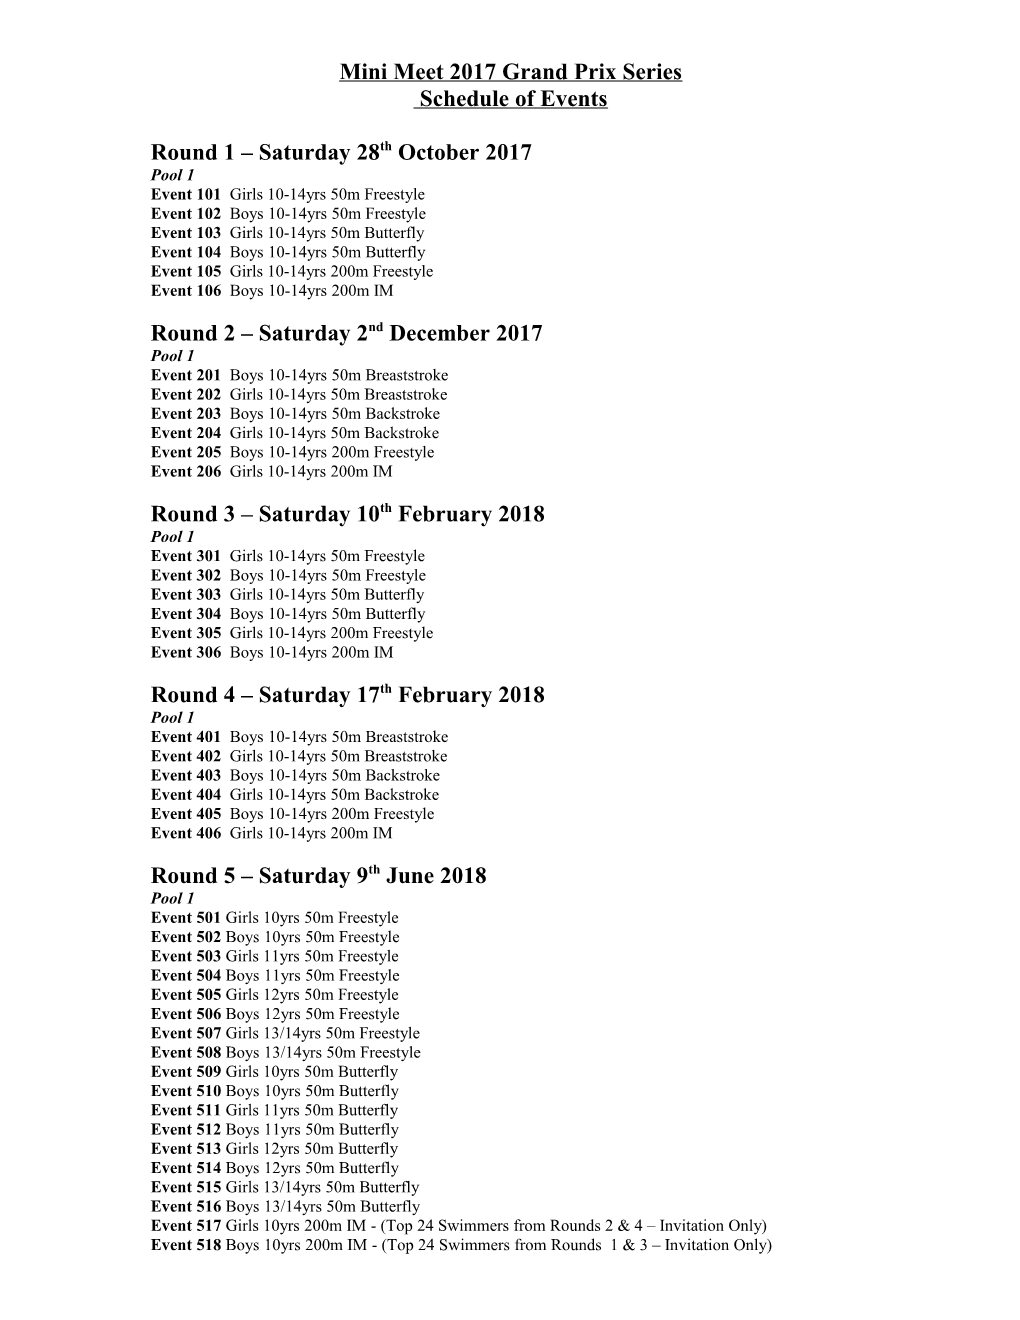 Mini Meet 2011 Grand Prix Series Schedule of Events